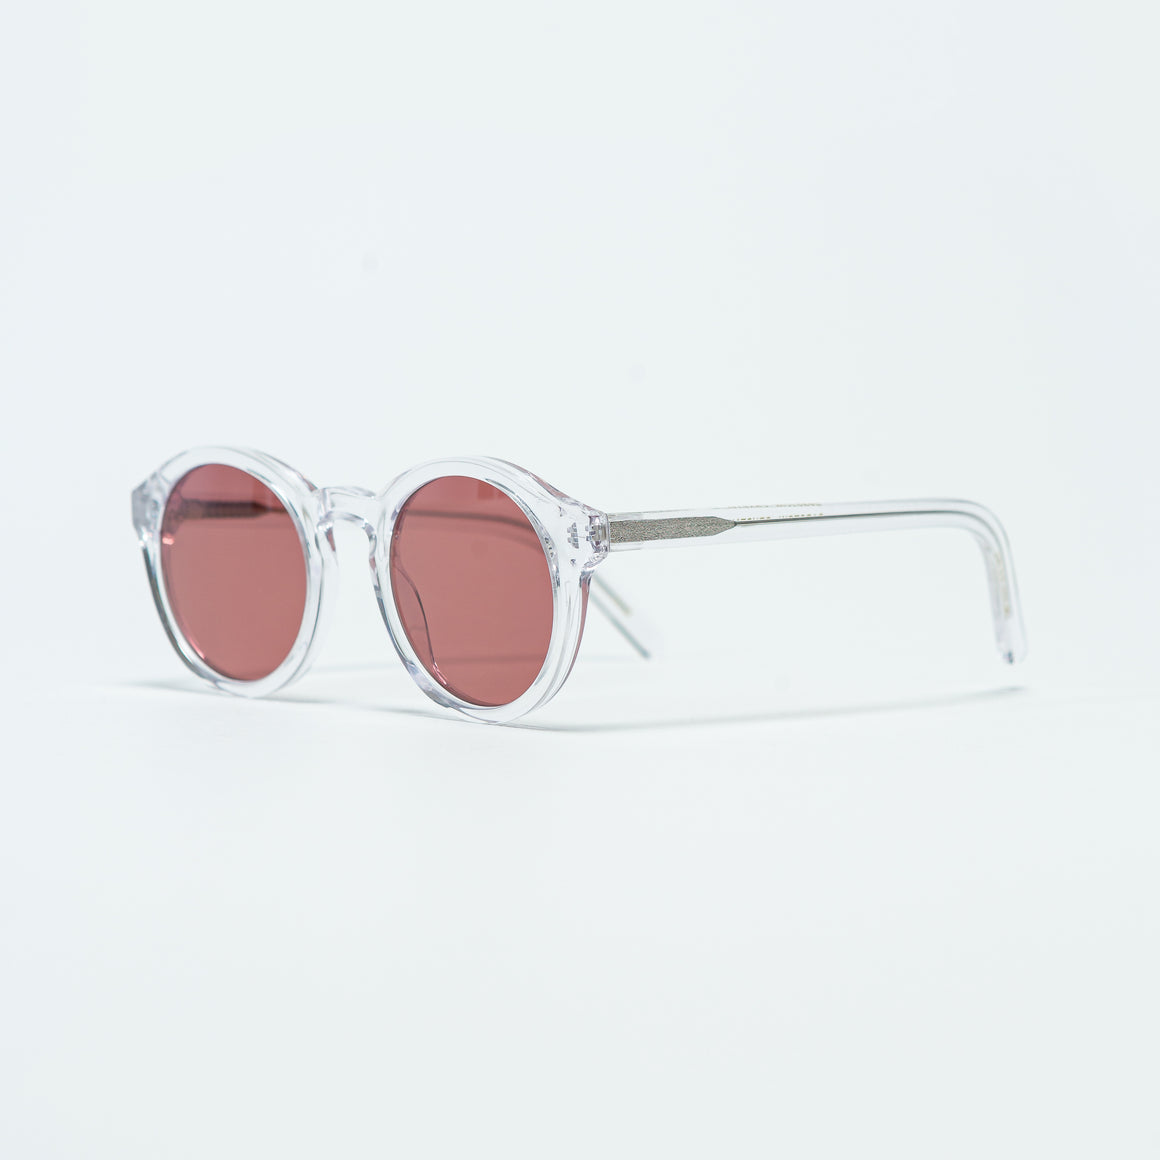 Monokel Eyewear - Barstow - Crystal/Pink Solid - UP THERE